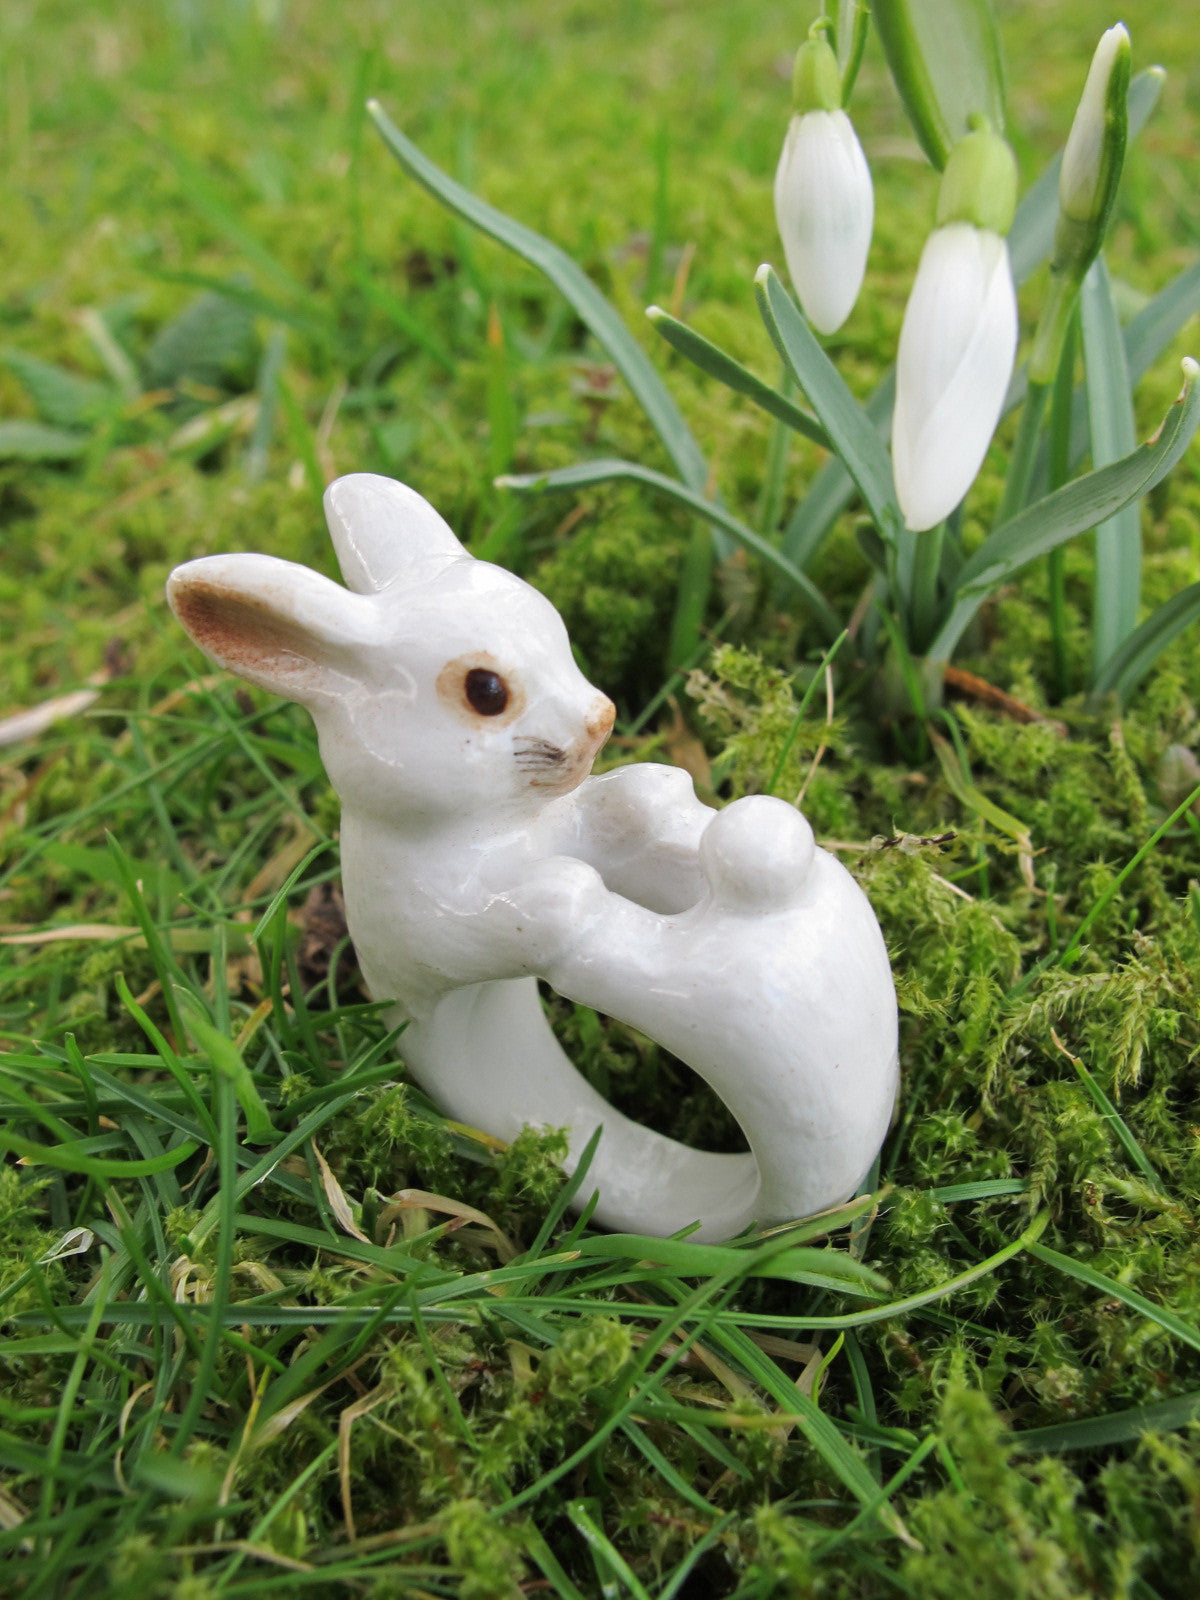 Autumn Sale - Lucky White Rabbit Ring